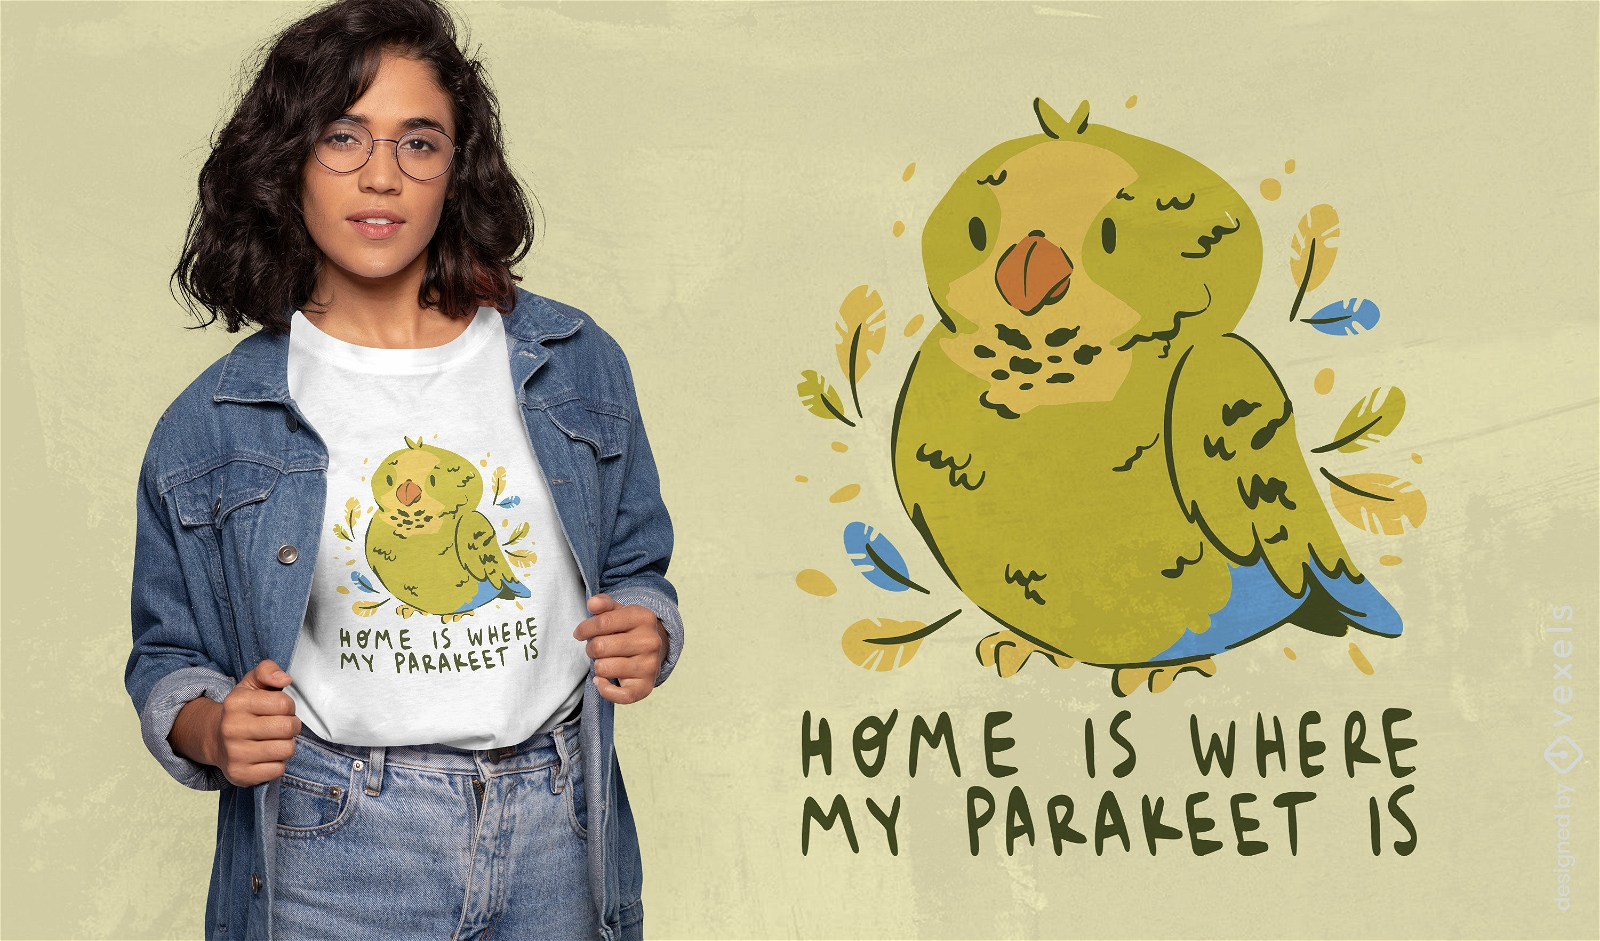 Parakeet pet quote t-shirt design